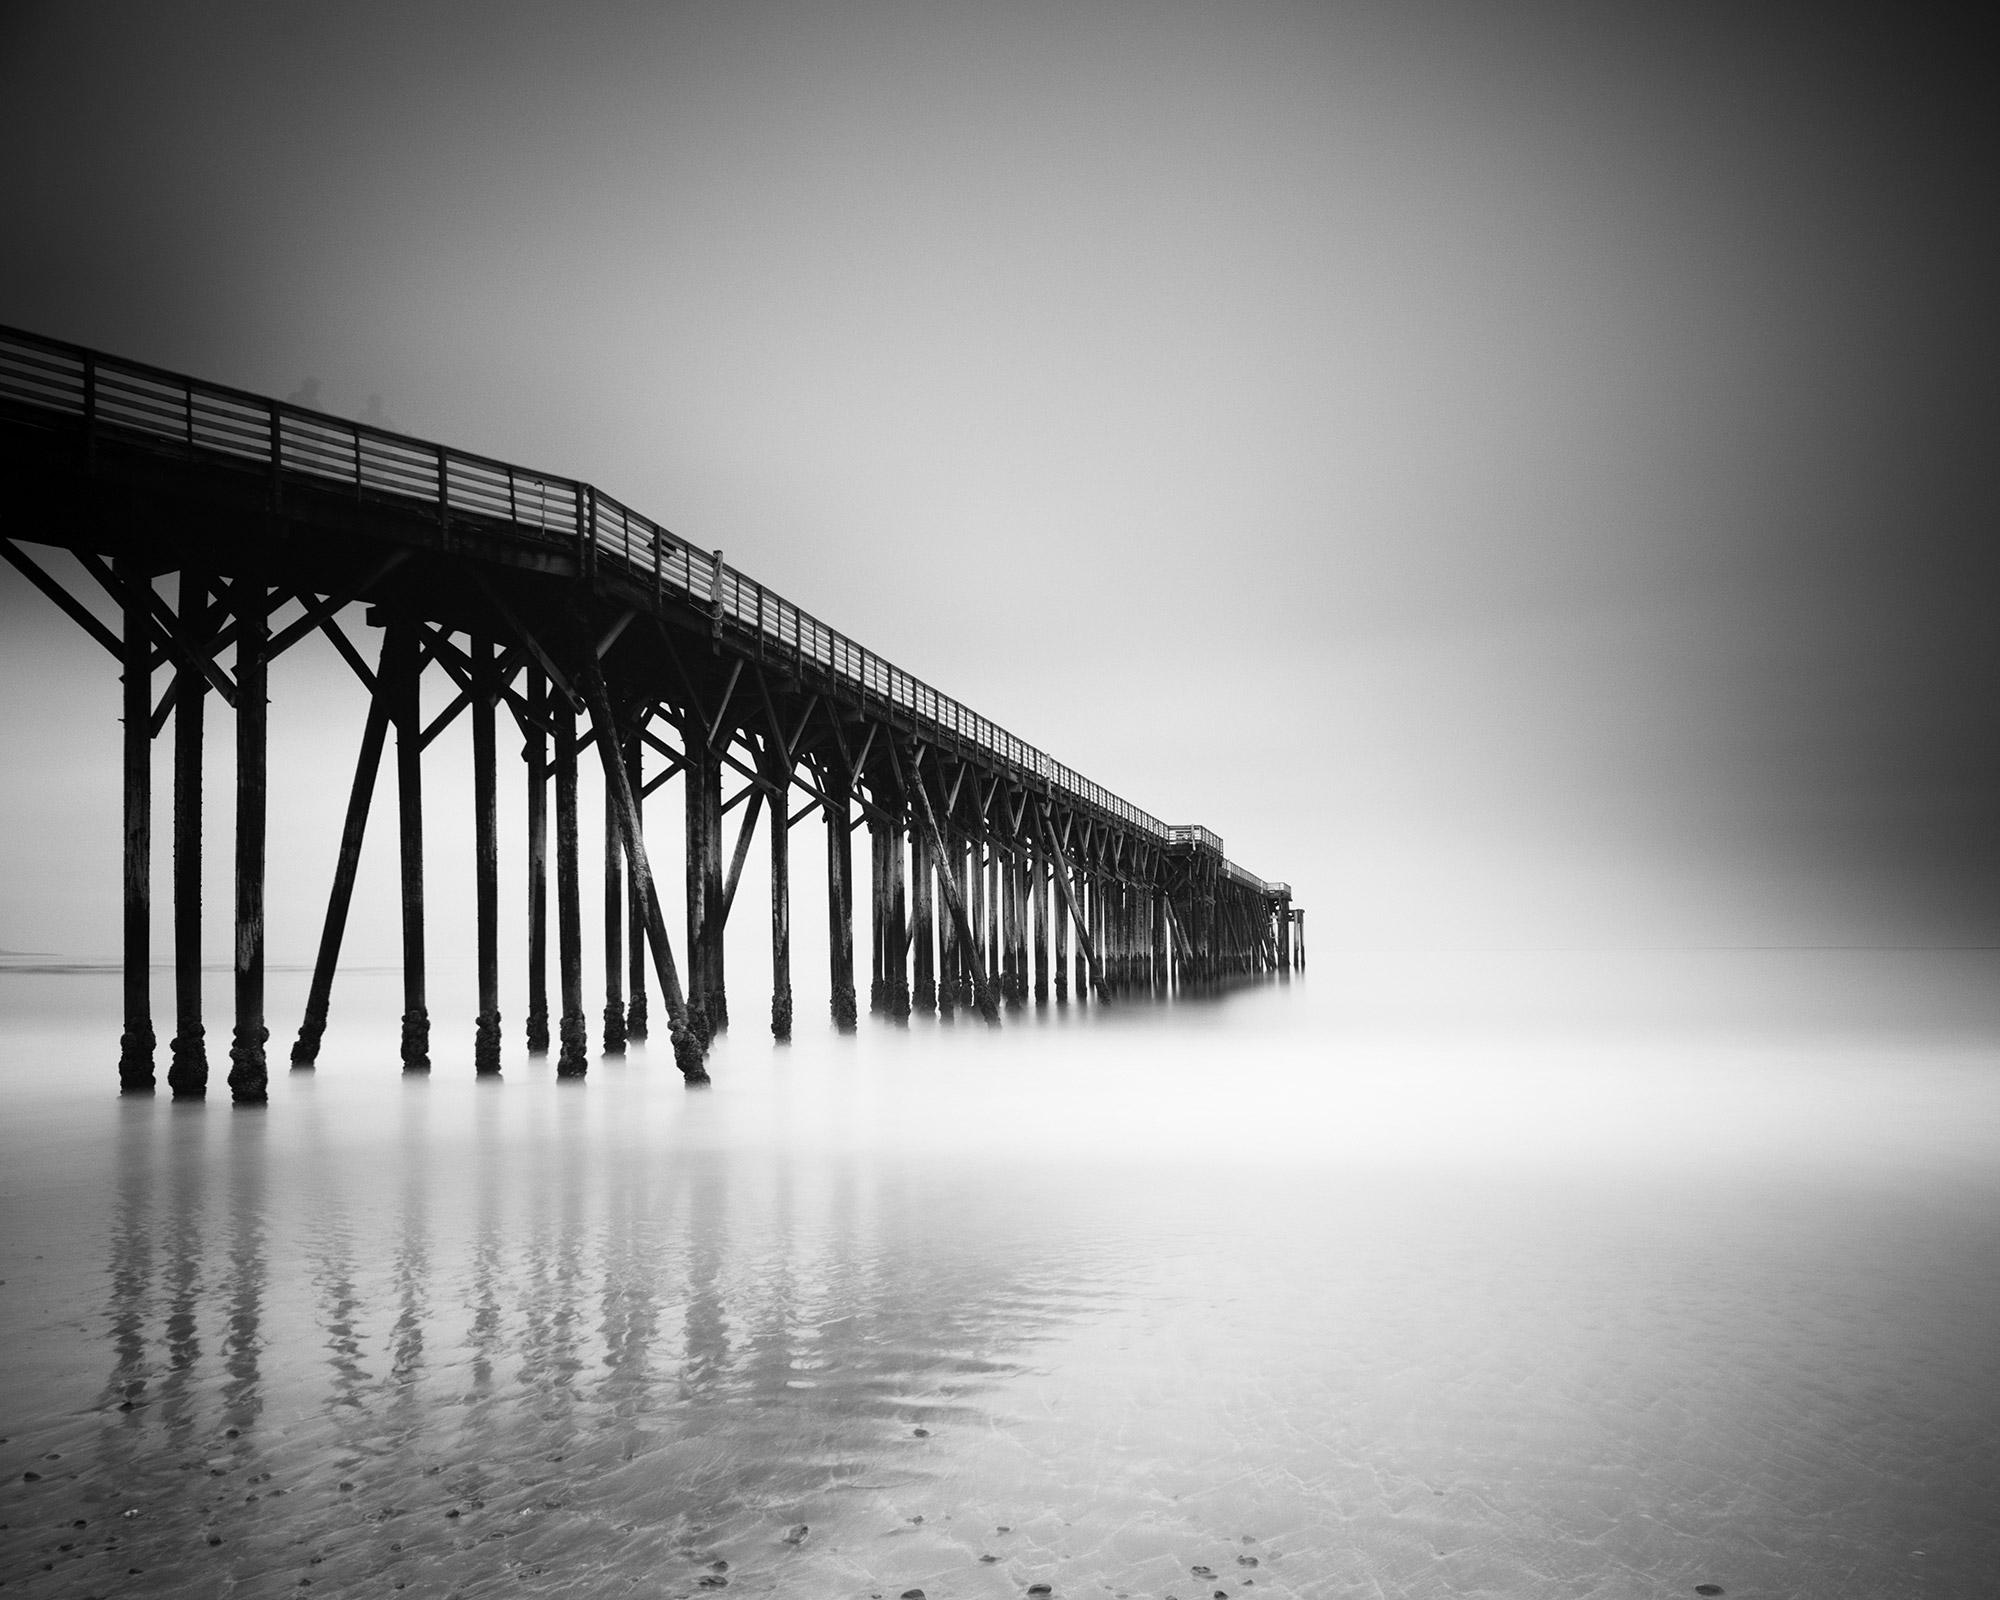 Black Pier, Beach, California, USA, black and white long exposure photography